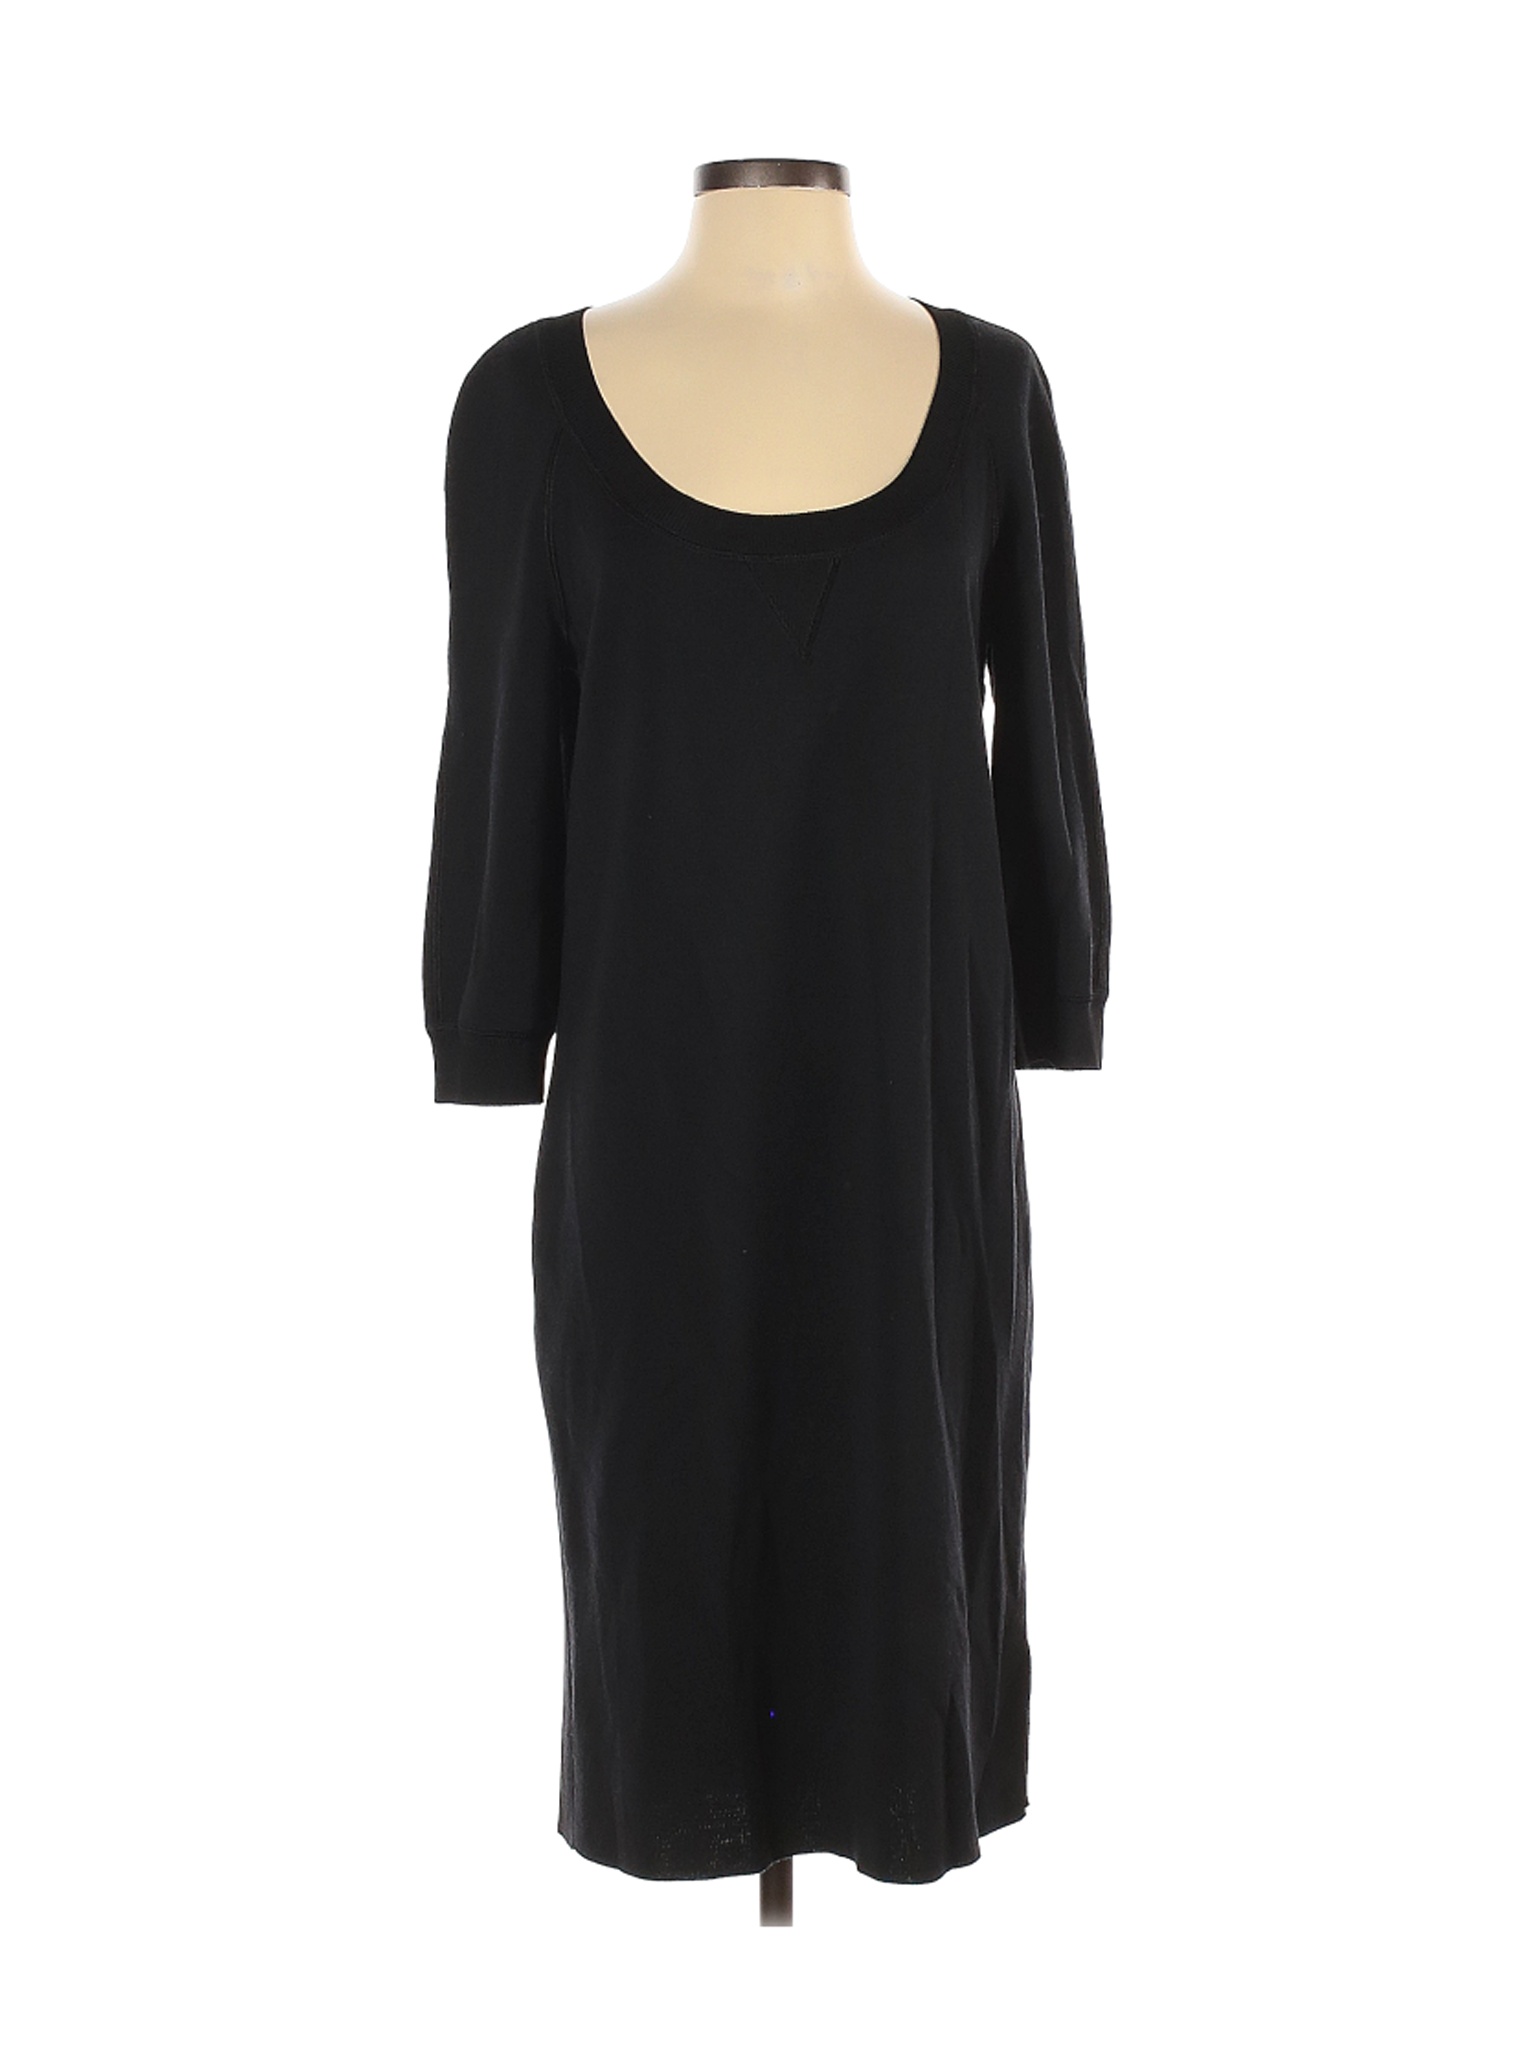 St. John Women Black Casual Dress 8 | eBay